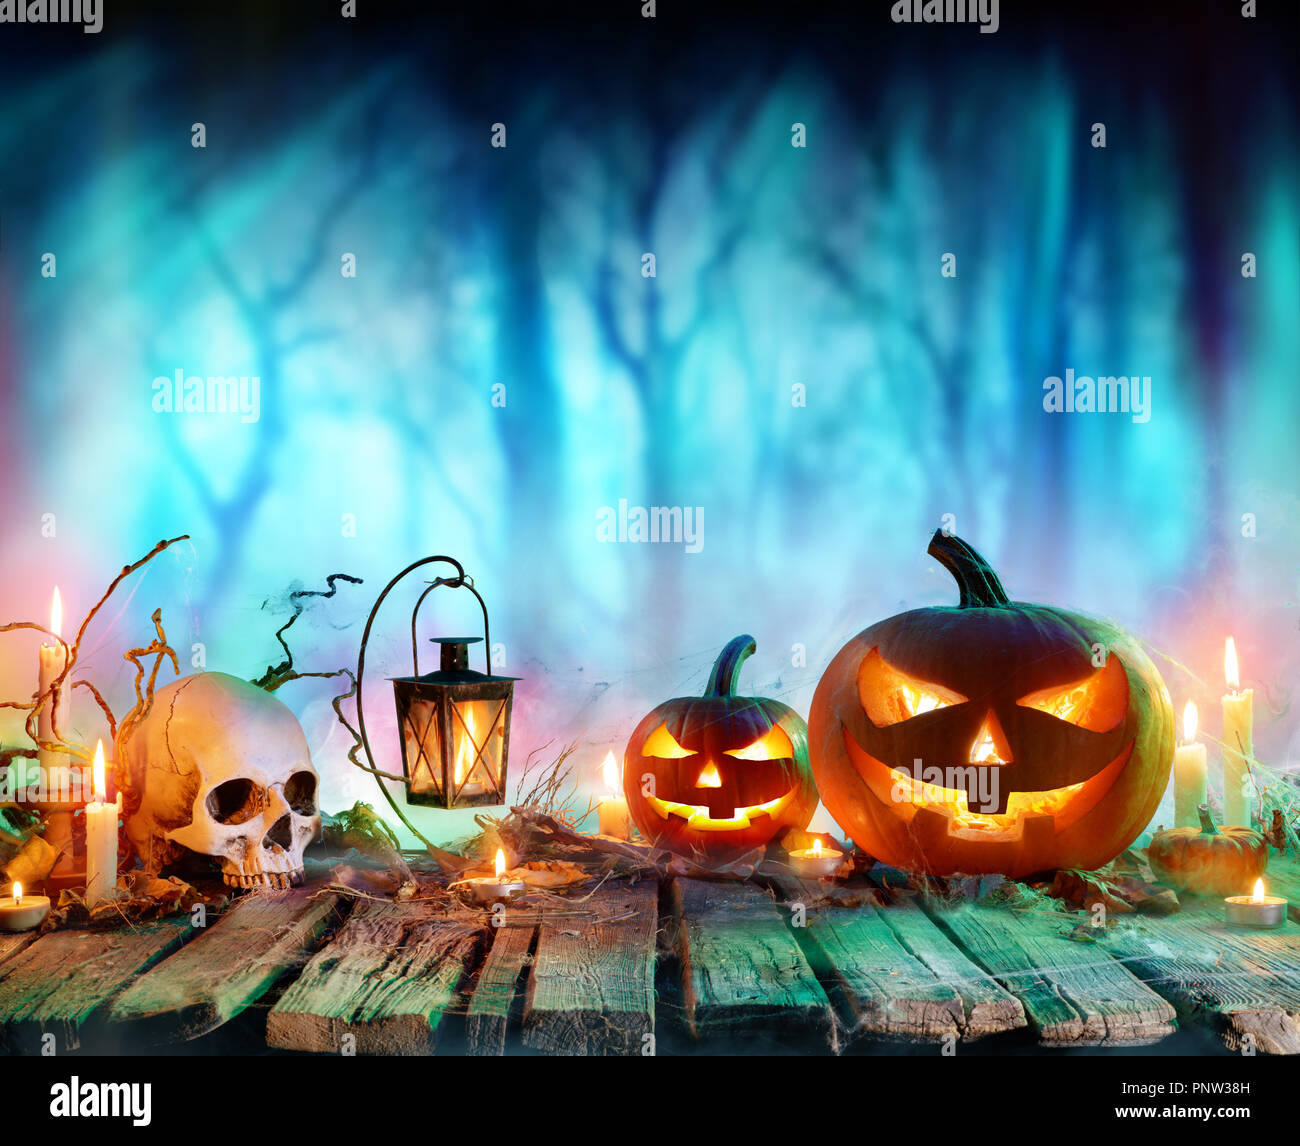 Jack O' lanternes et Bougies sur table en forêt brumeuse - Halloween Background Banque D'Images